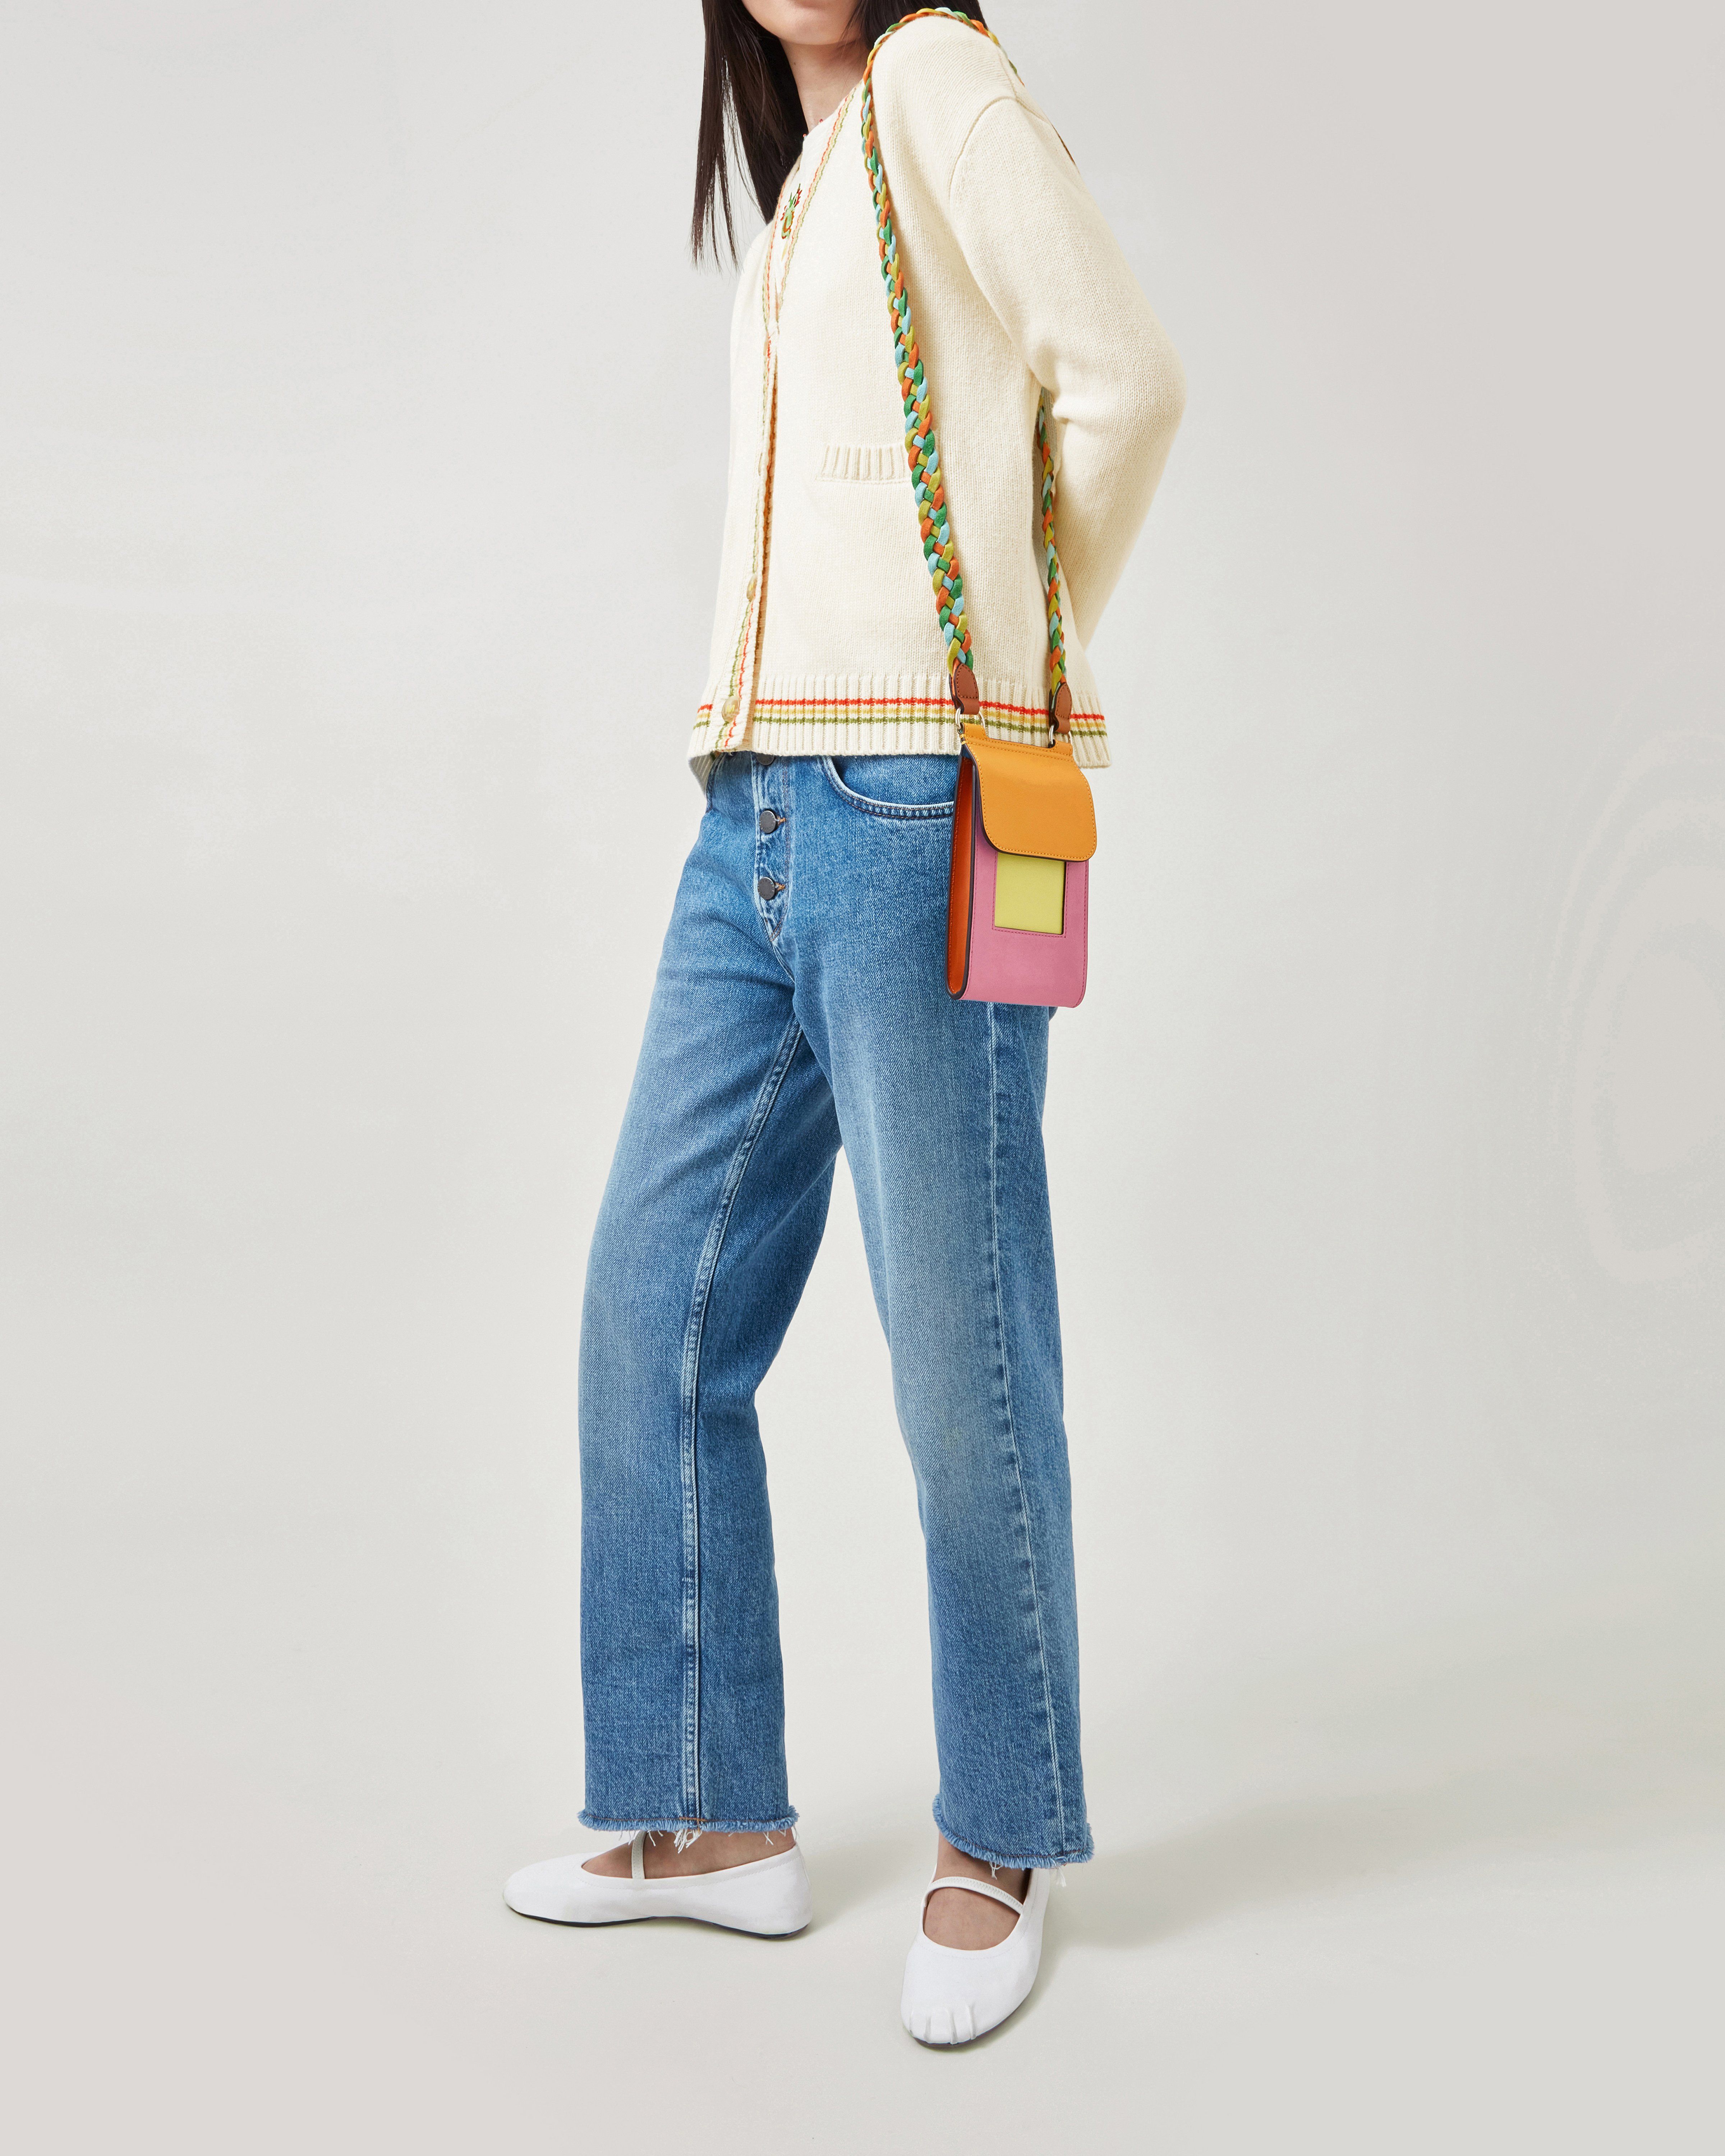 Model wearing Mulberry x Mira Mikati Mini Antony bag in Honey and Multicolour